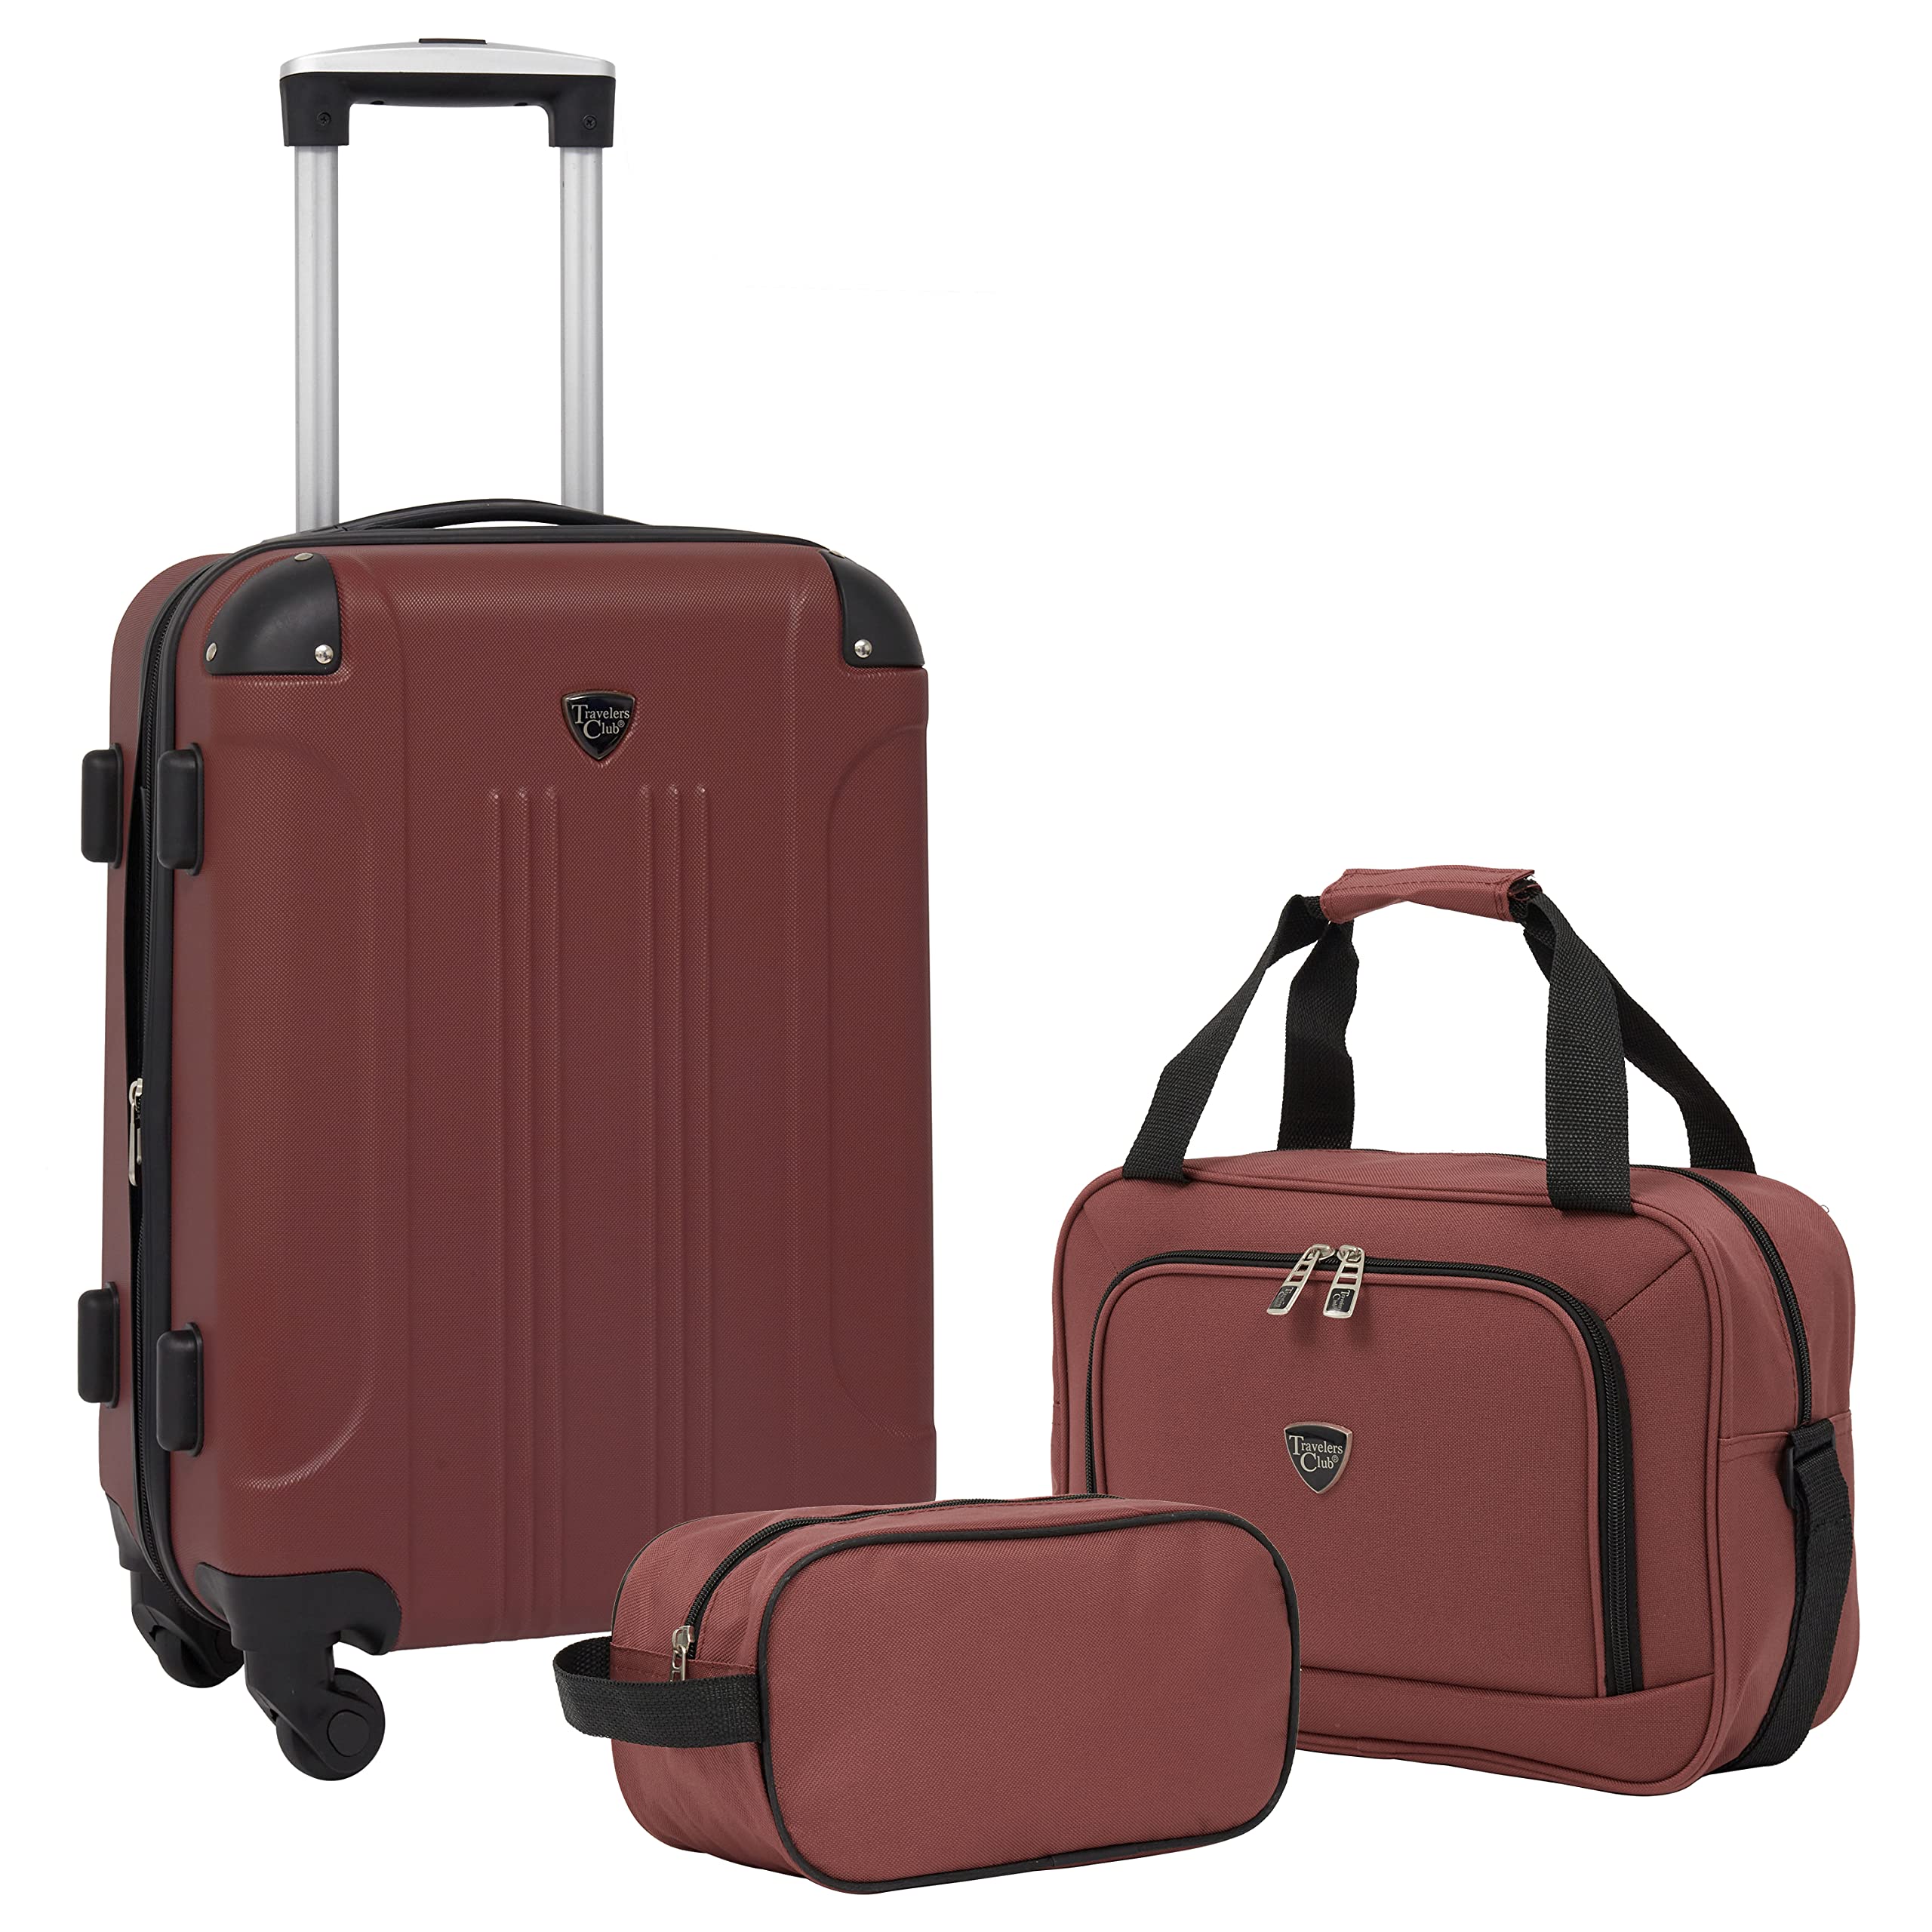 Travelers Club Sky Luggage Set